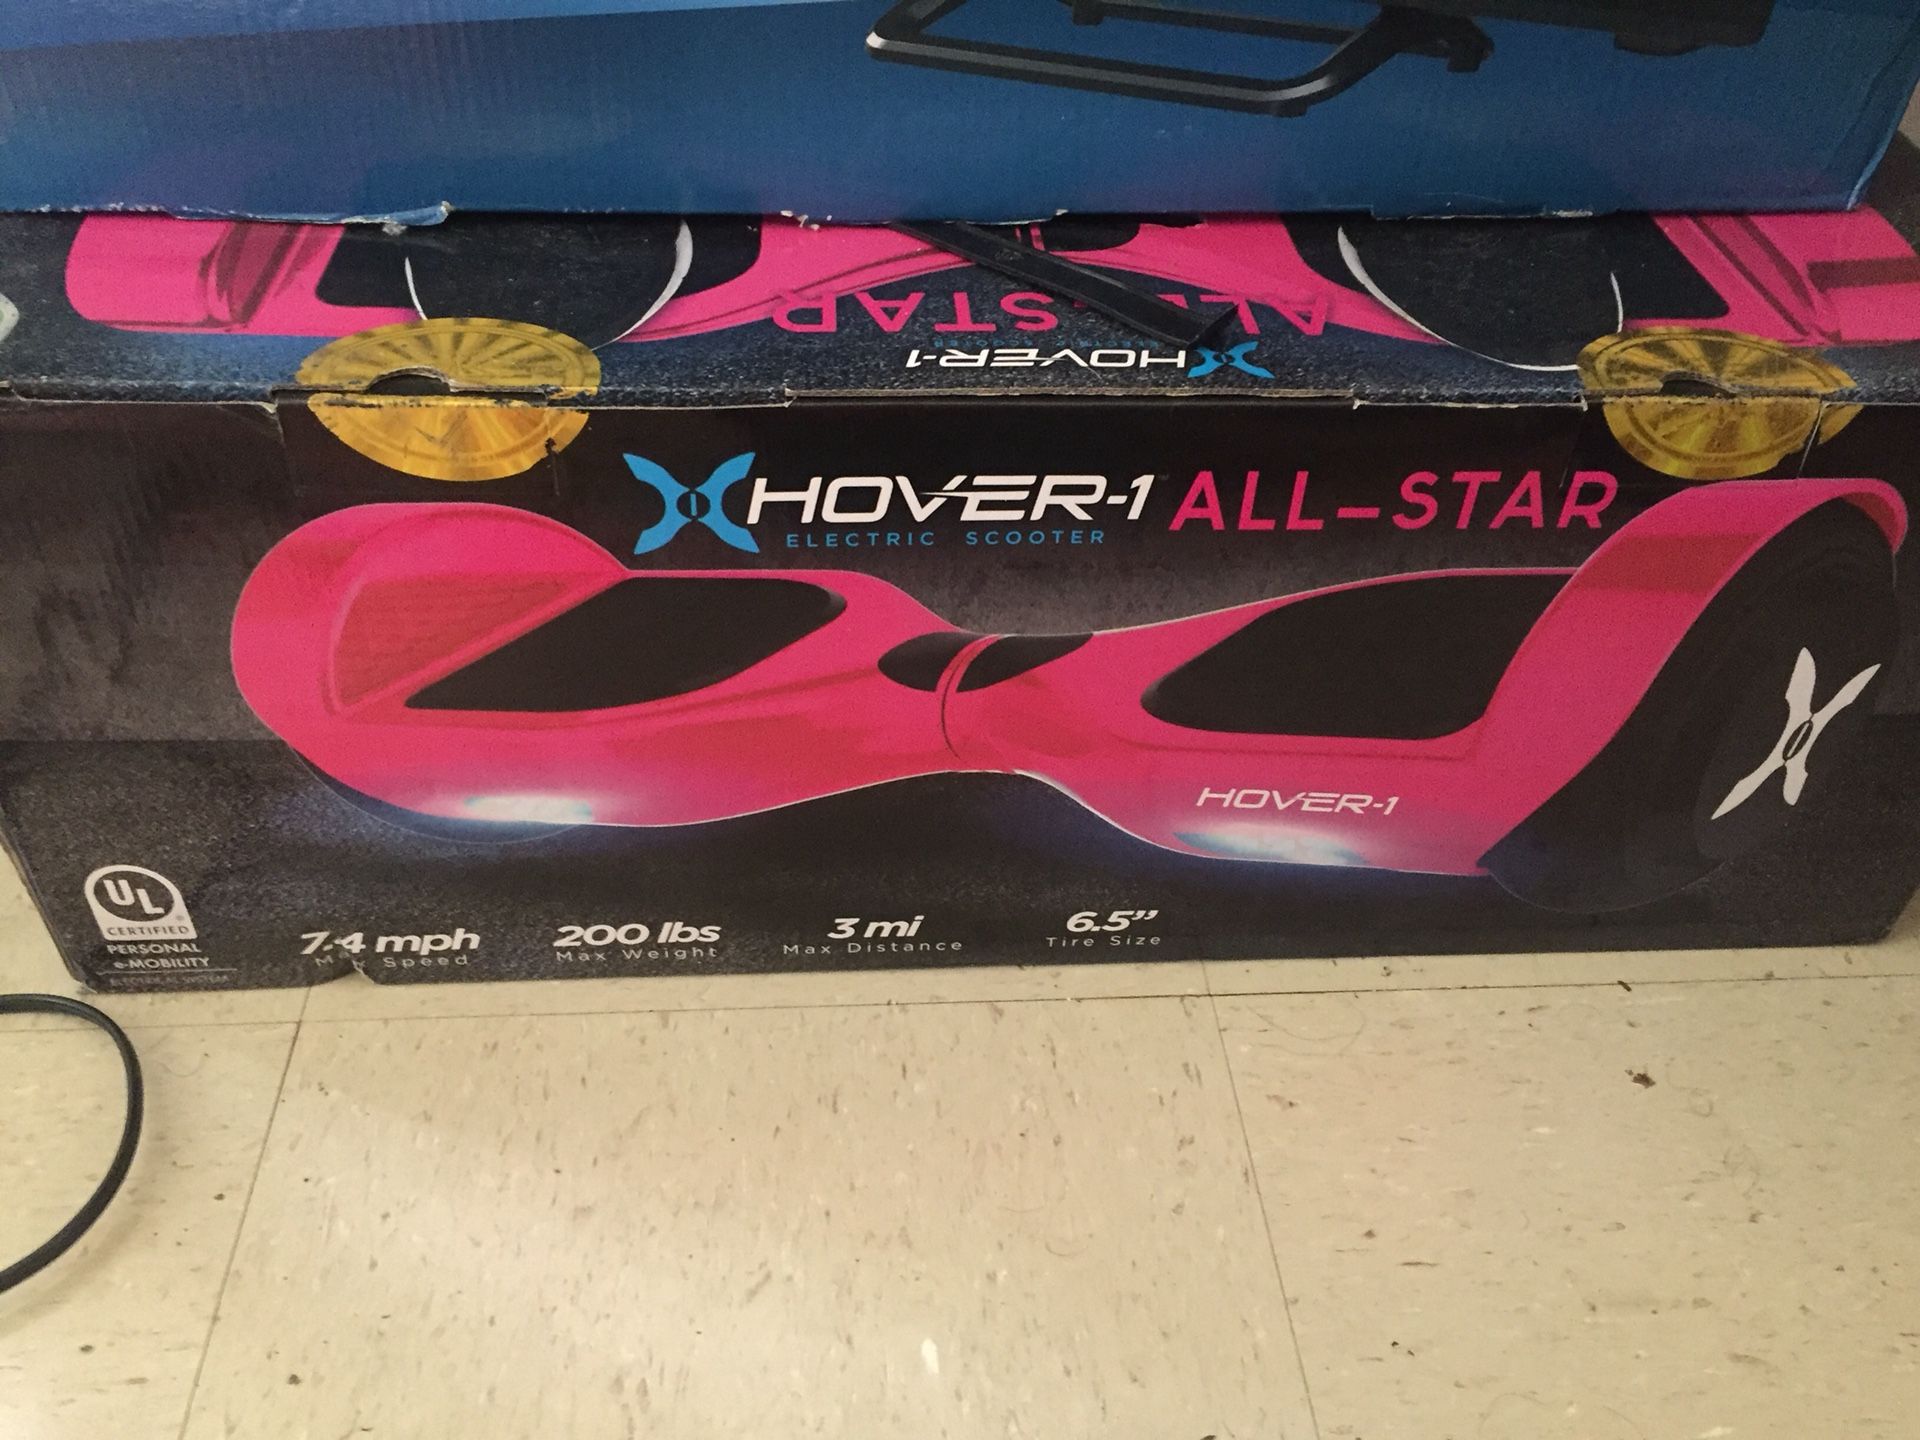 XHover-1 Hoverboard